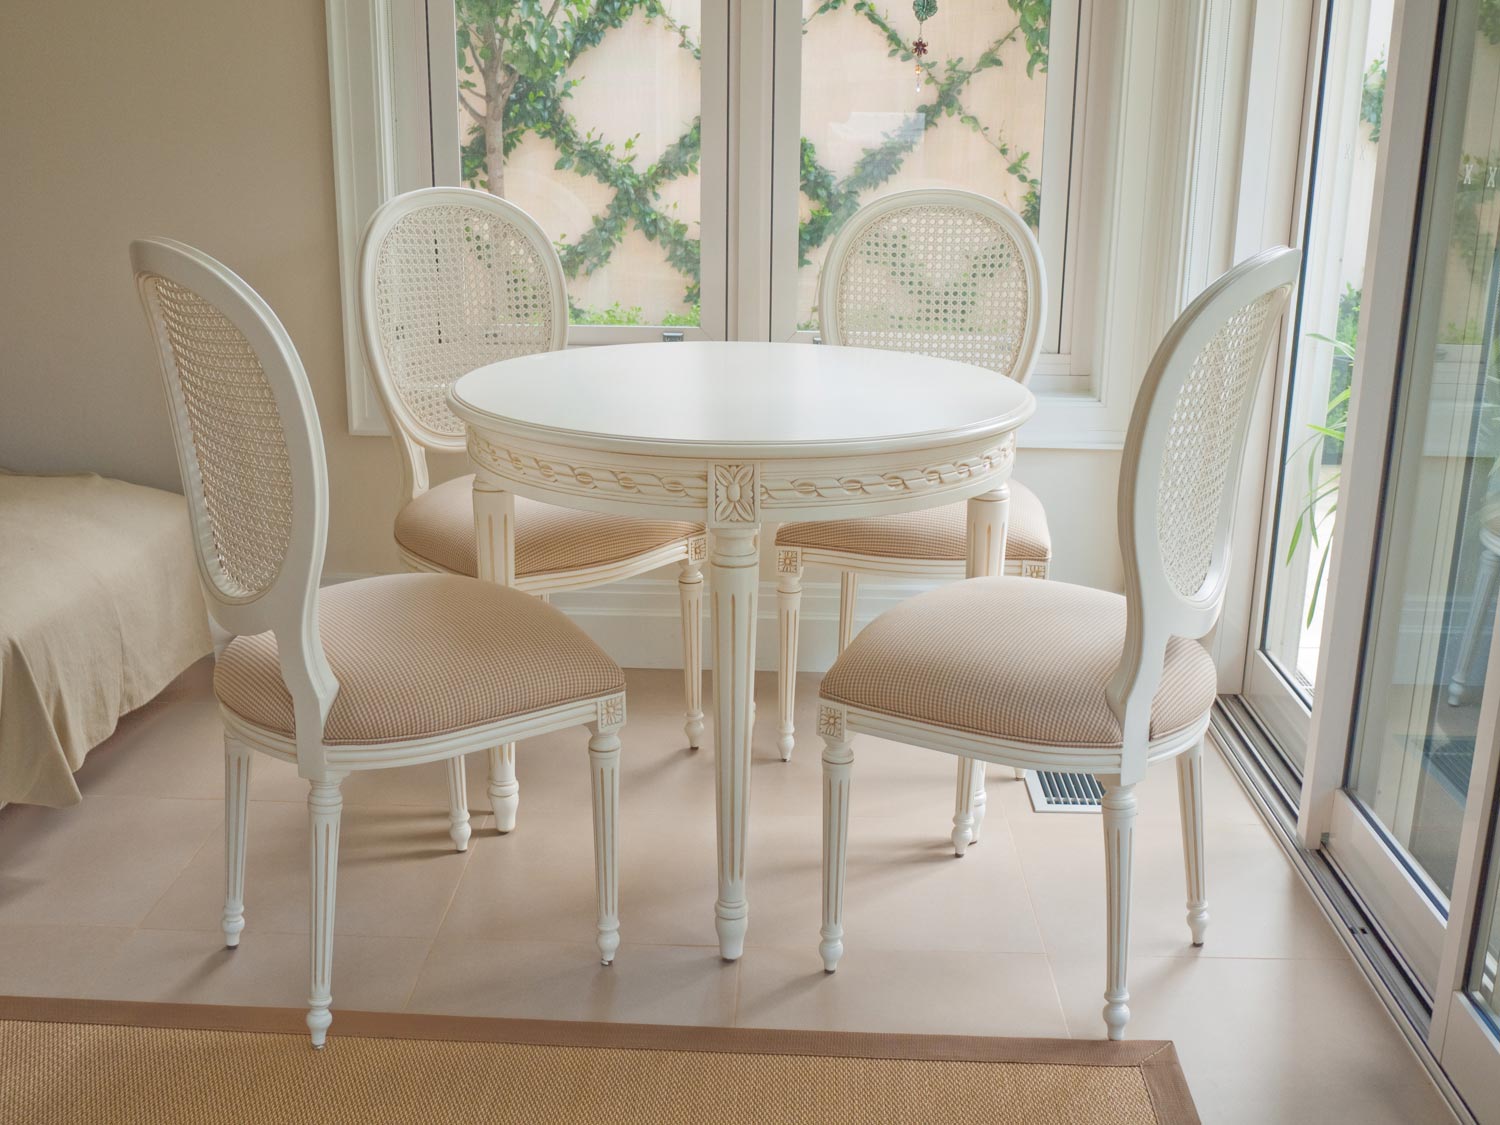 16 French dining interior design